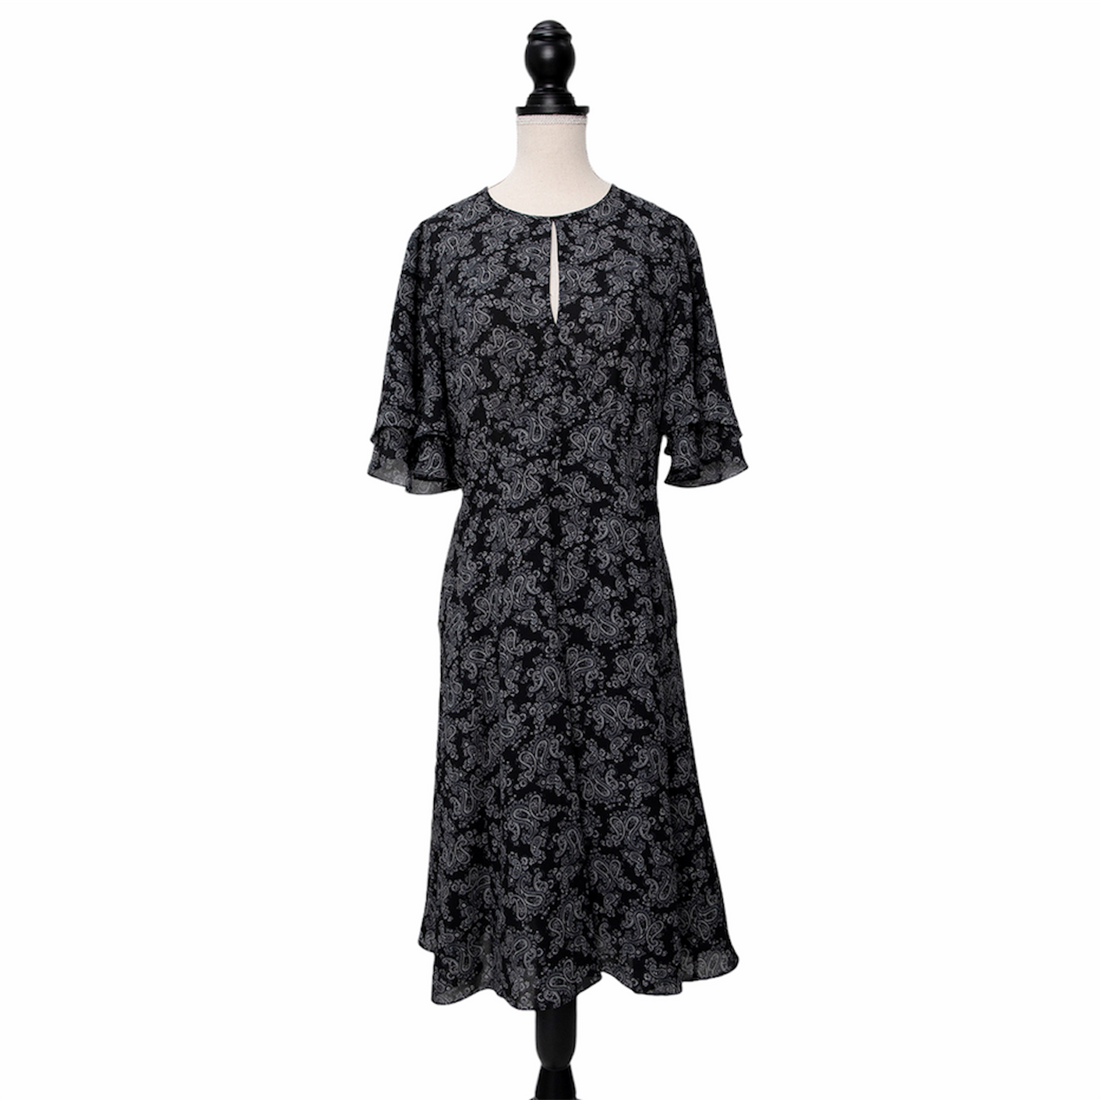 Michael Kors paisley print dress